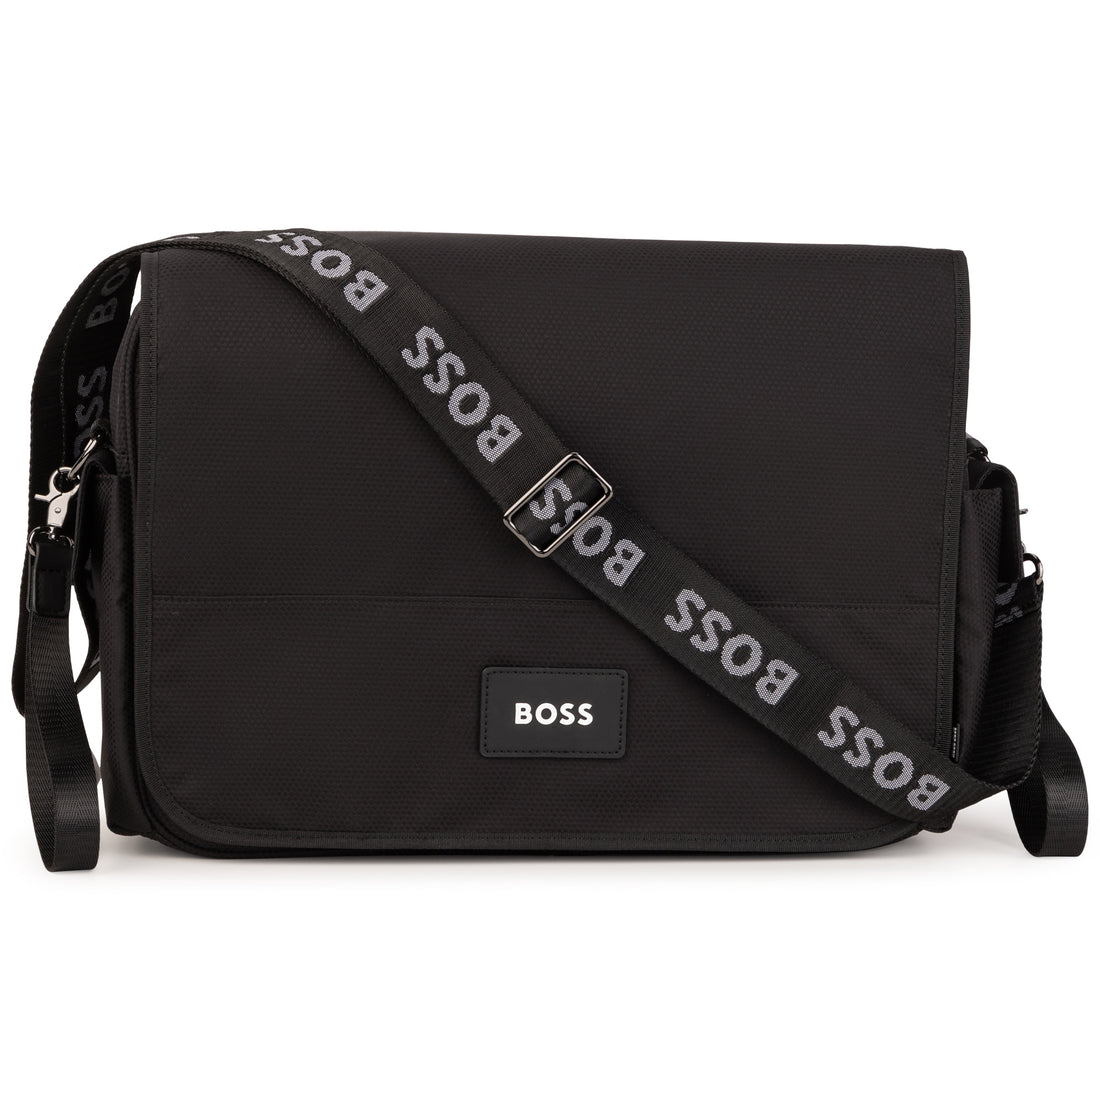 Boss Changing Bag Style: J90256